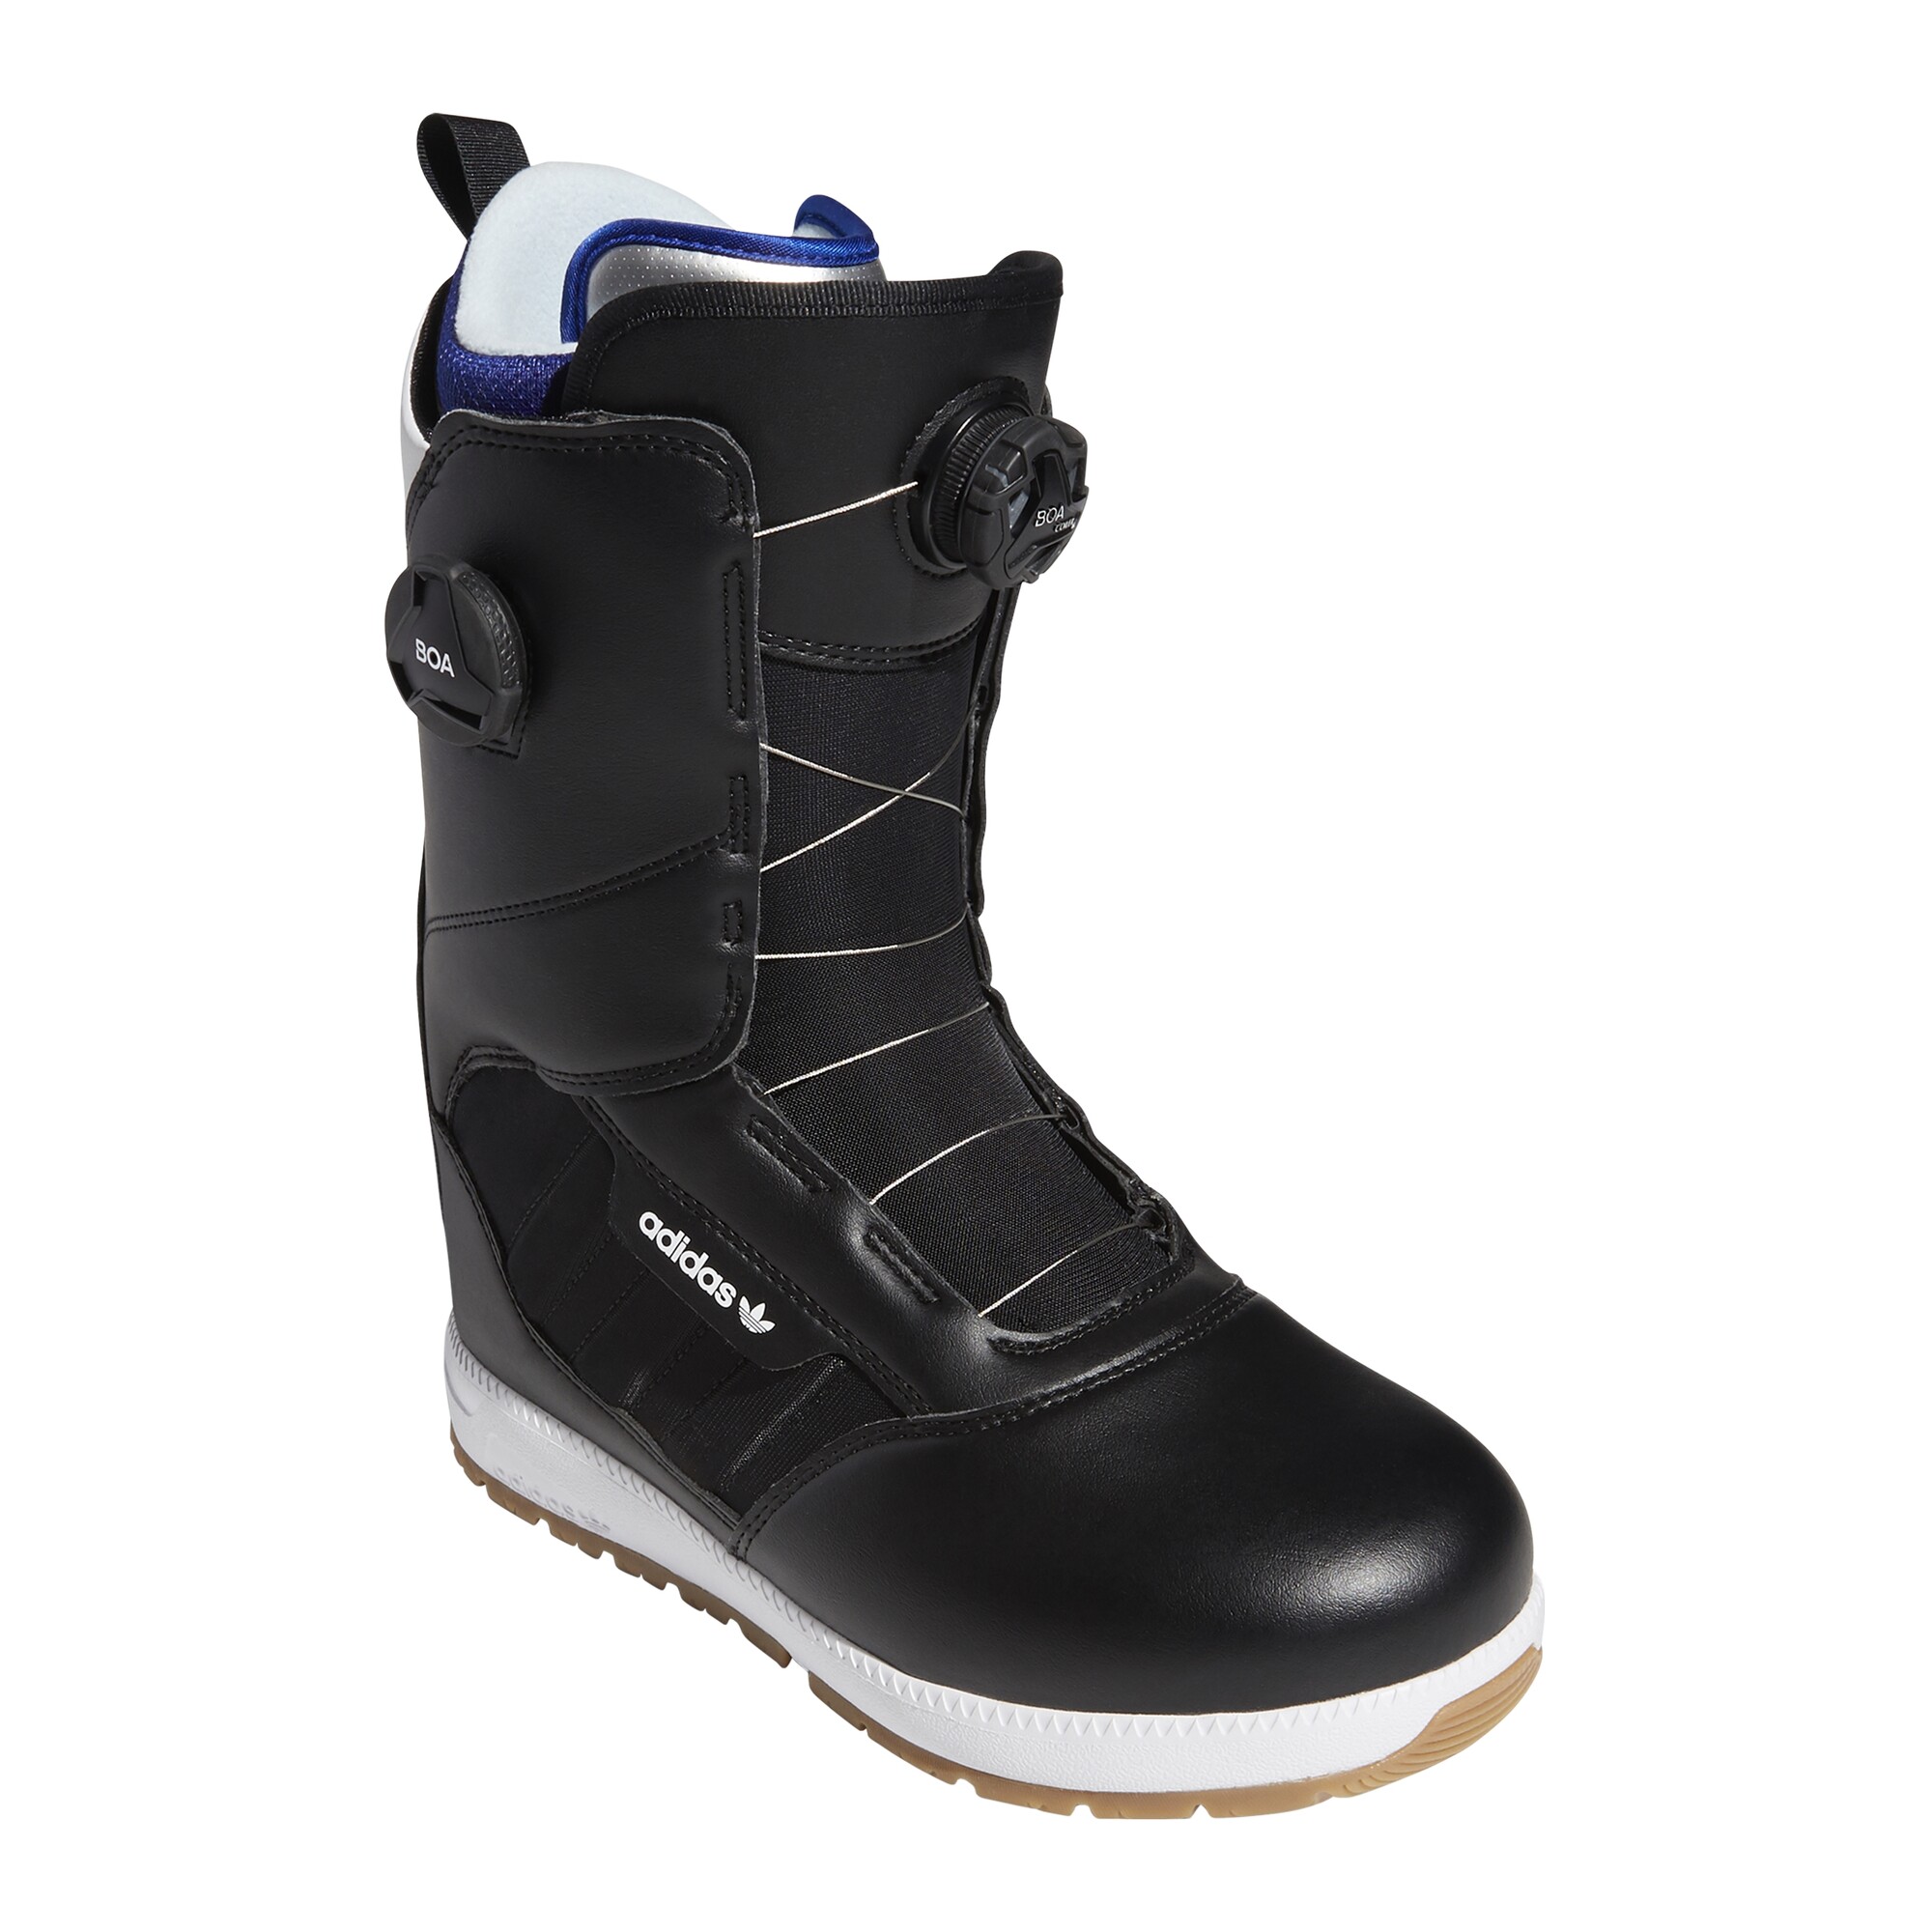 Adidas Response 3MC ADV snowboard boots core black / cloud white / gum